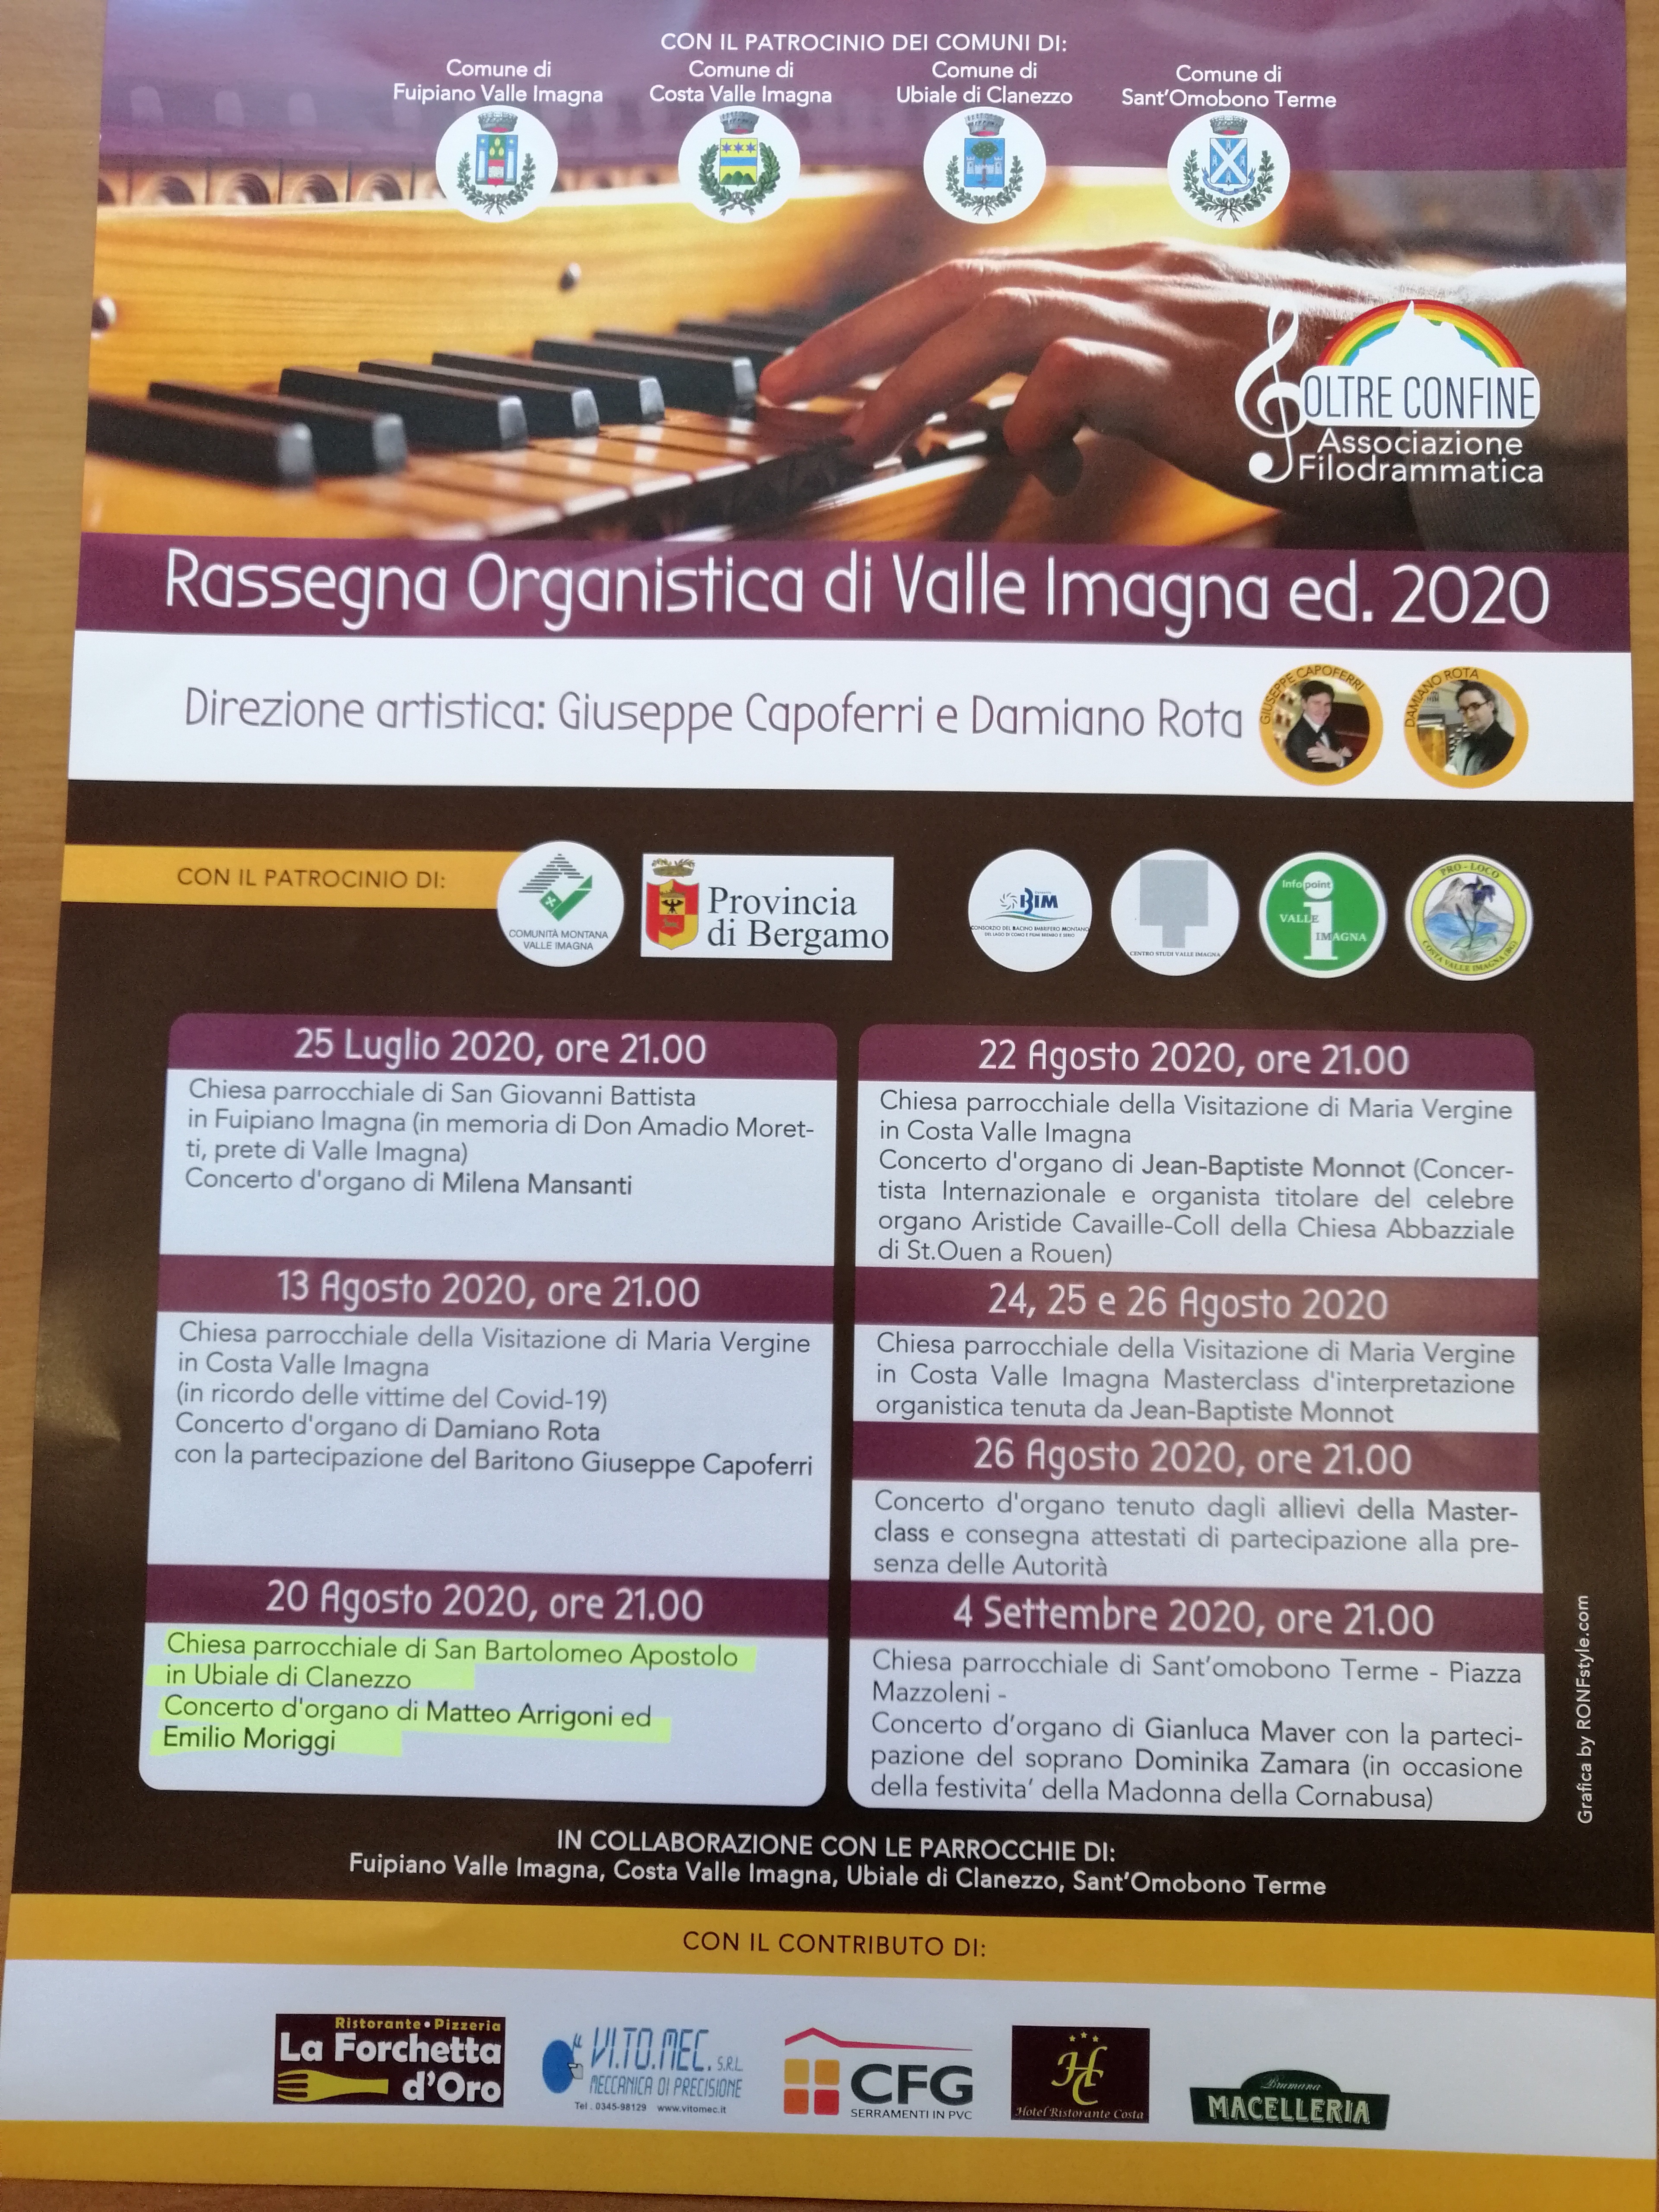 Rassegna organistica di Valle Imagna ed. 2020

